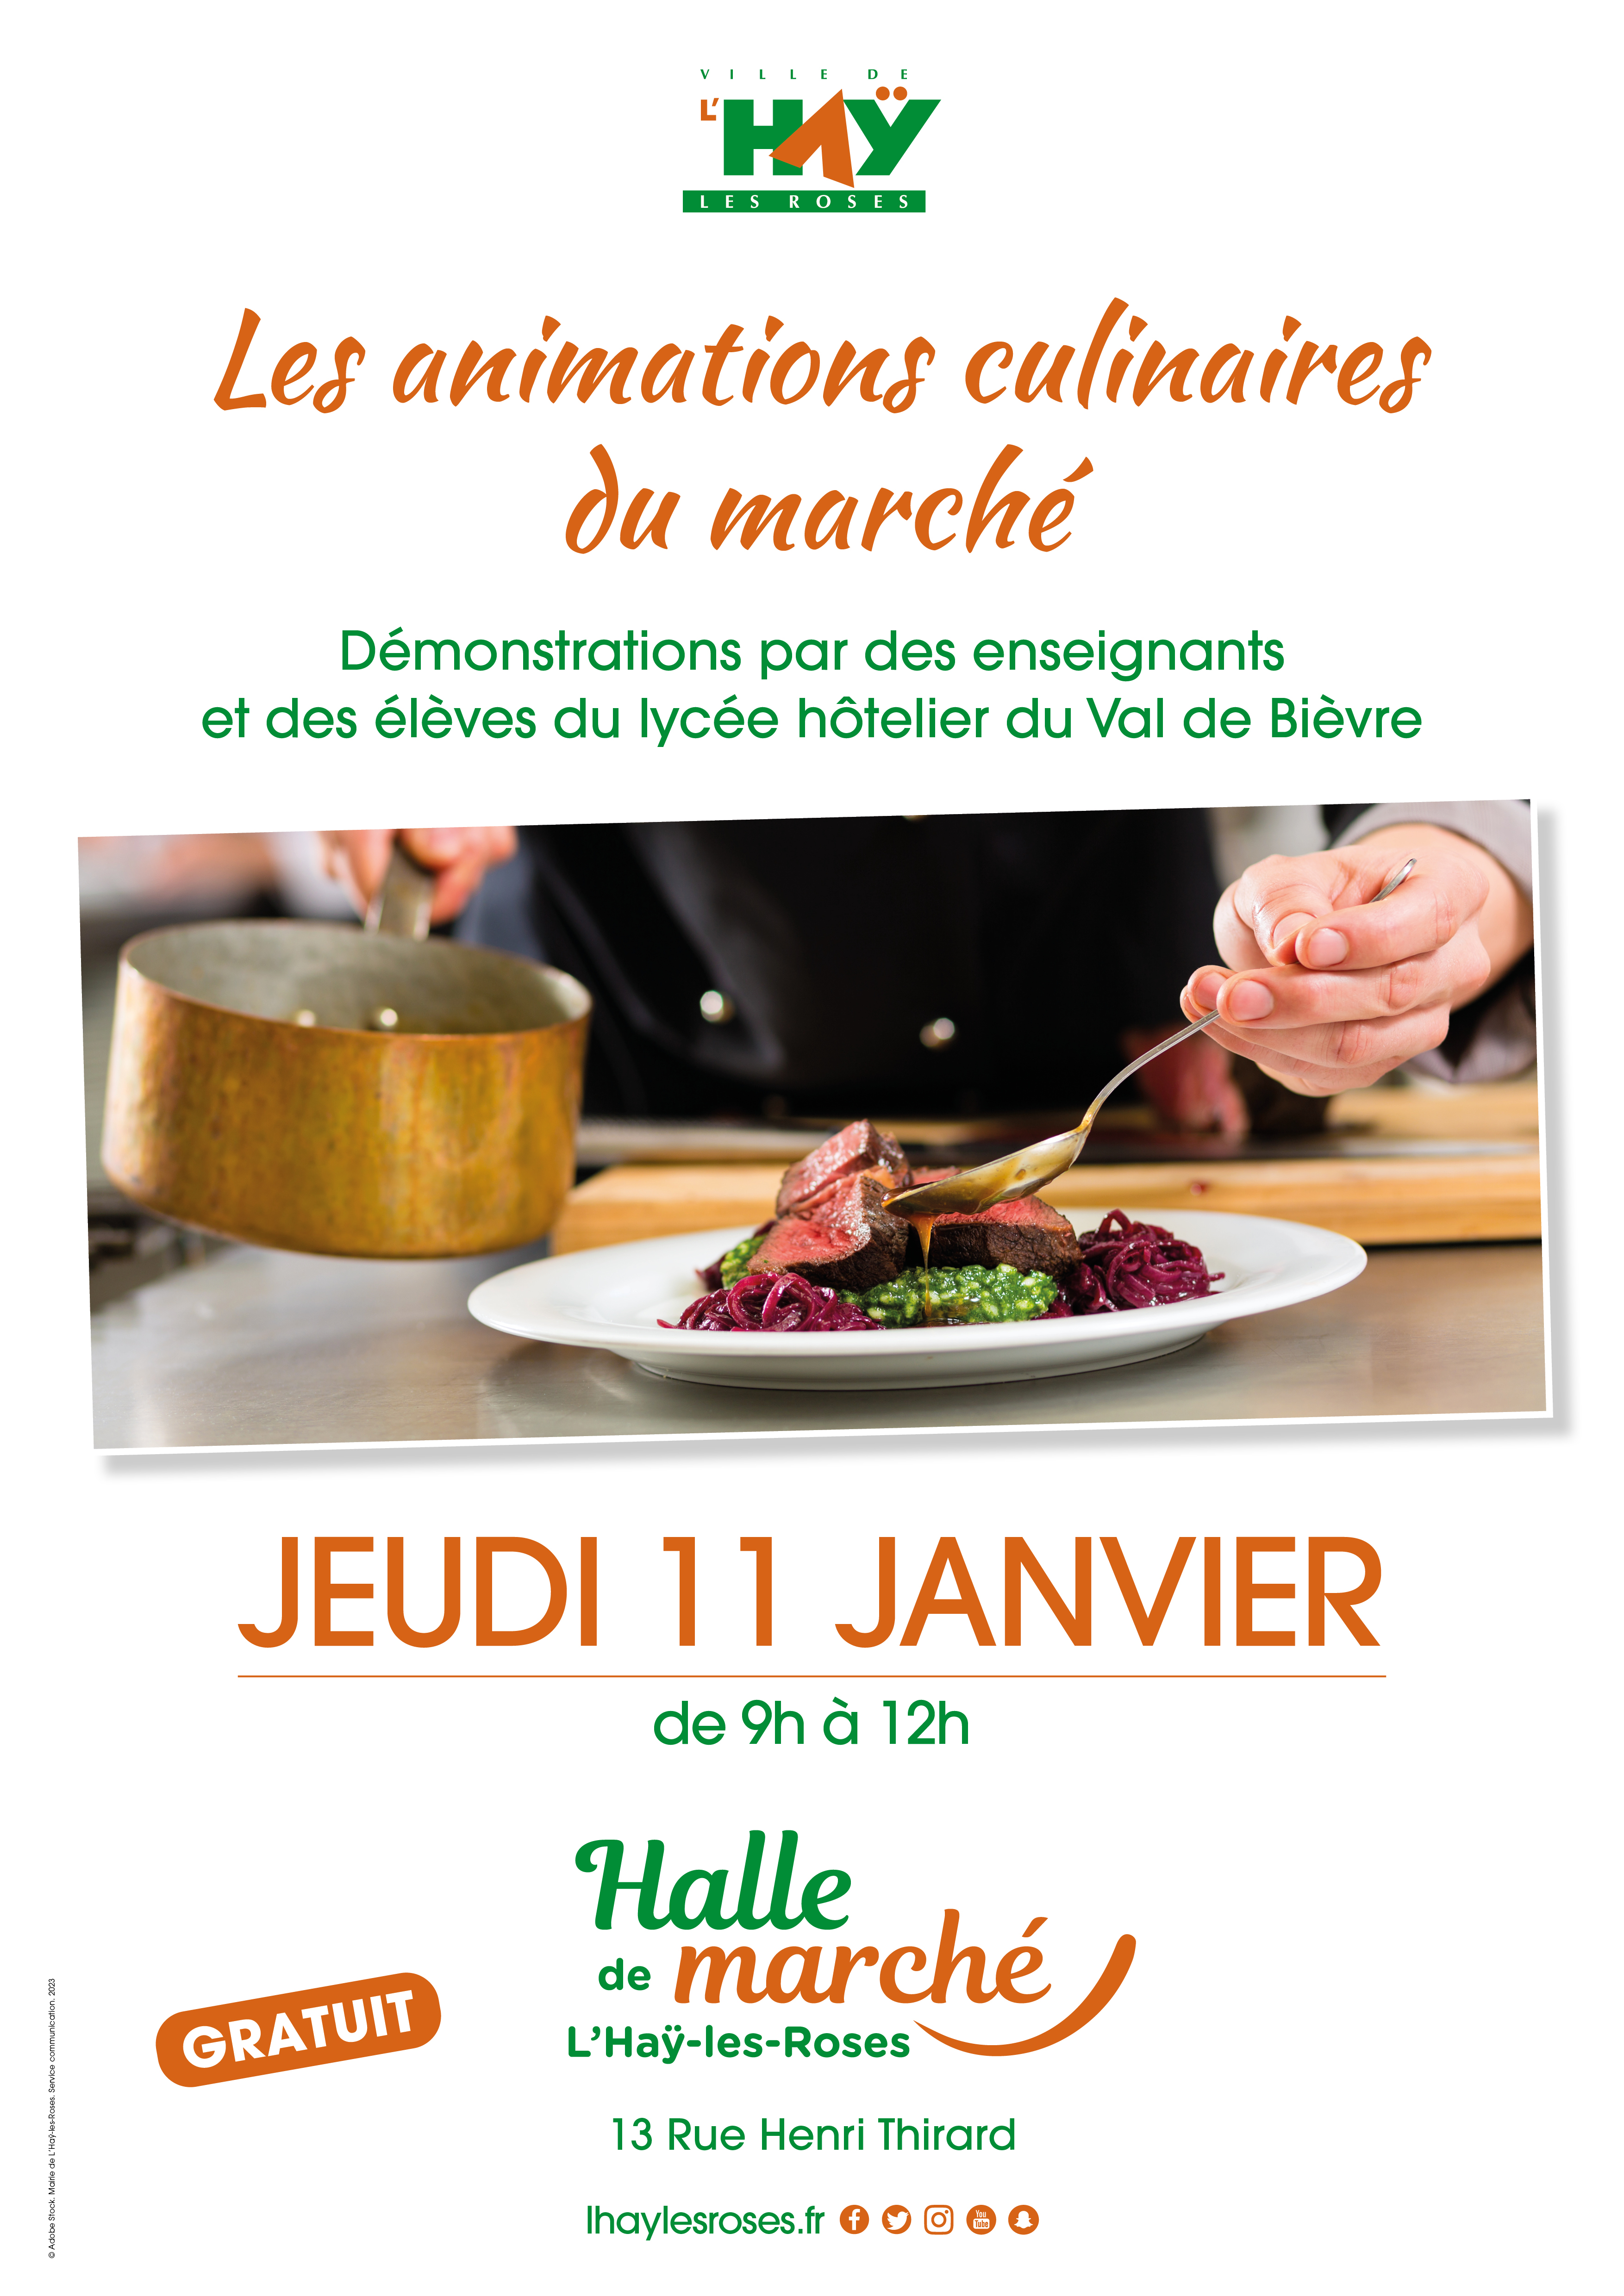 hdm demonstrations cuisine affiche A3 01